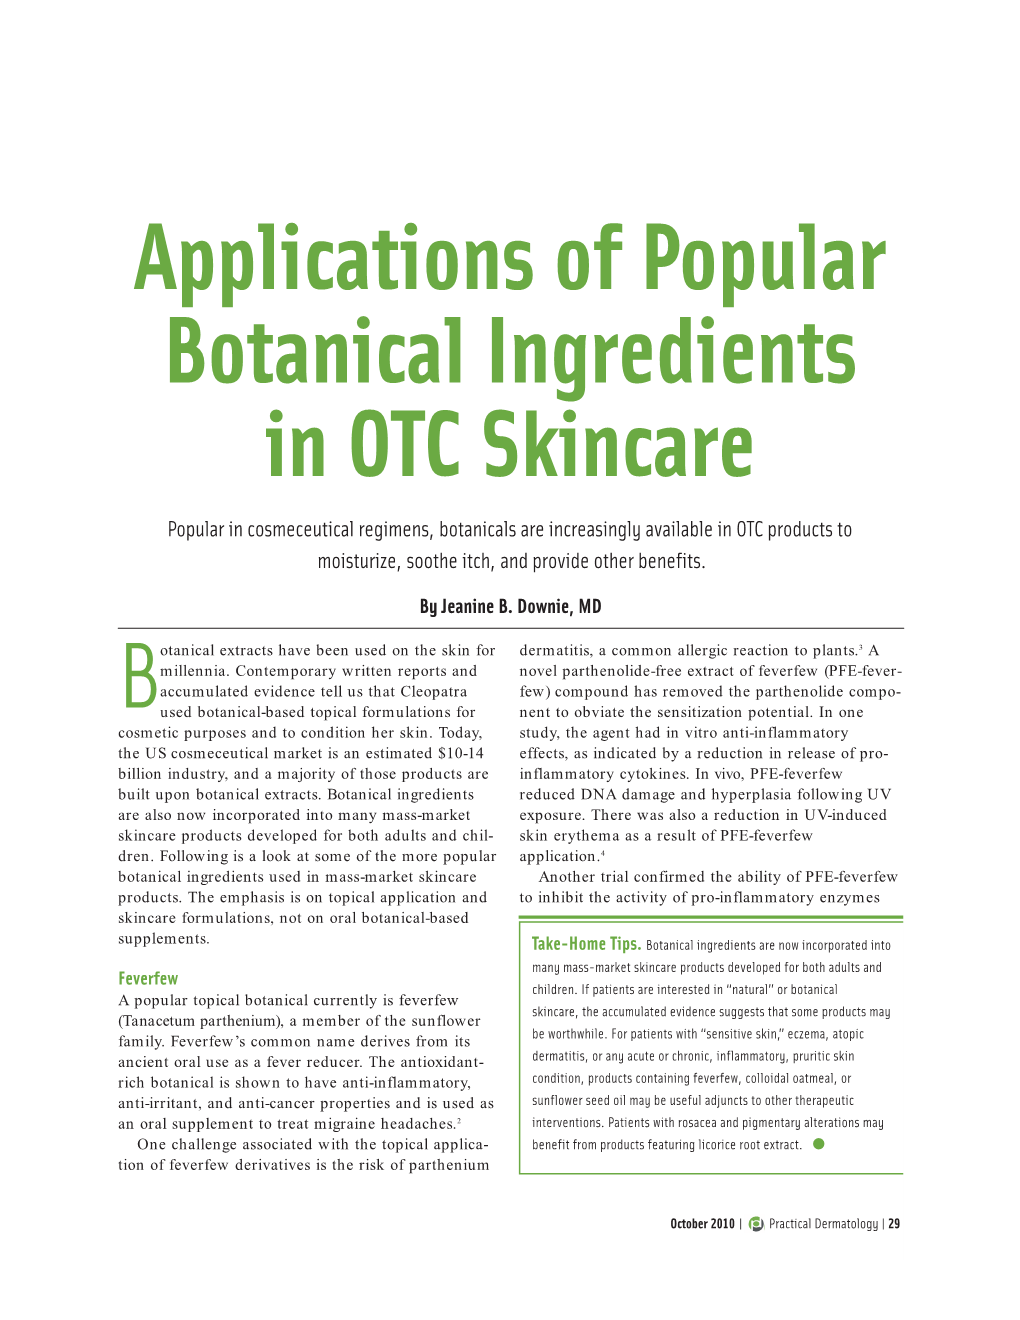 Applications of Popular Botanical Ingredients in OTC Skincare